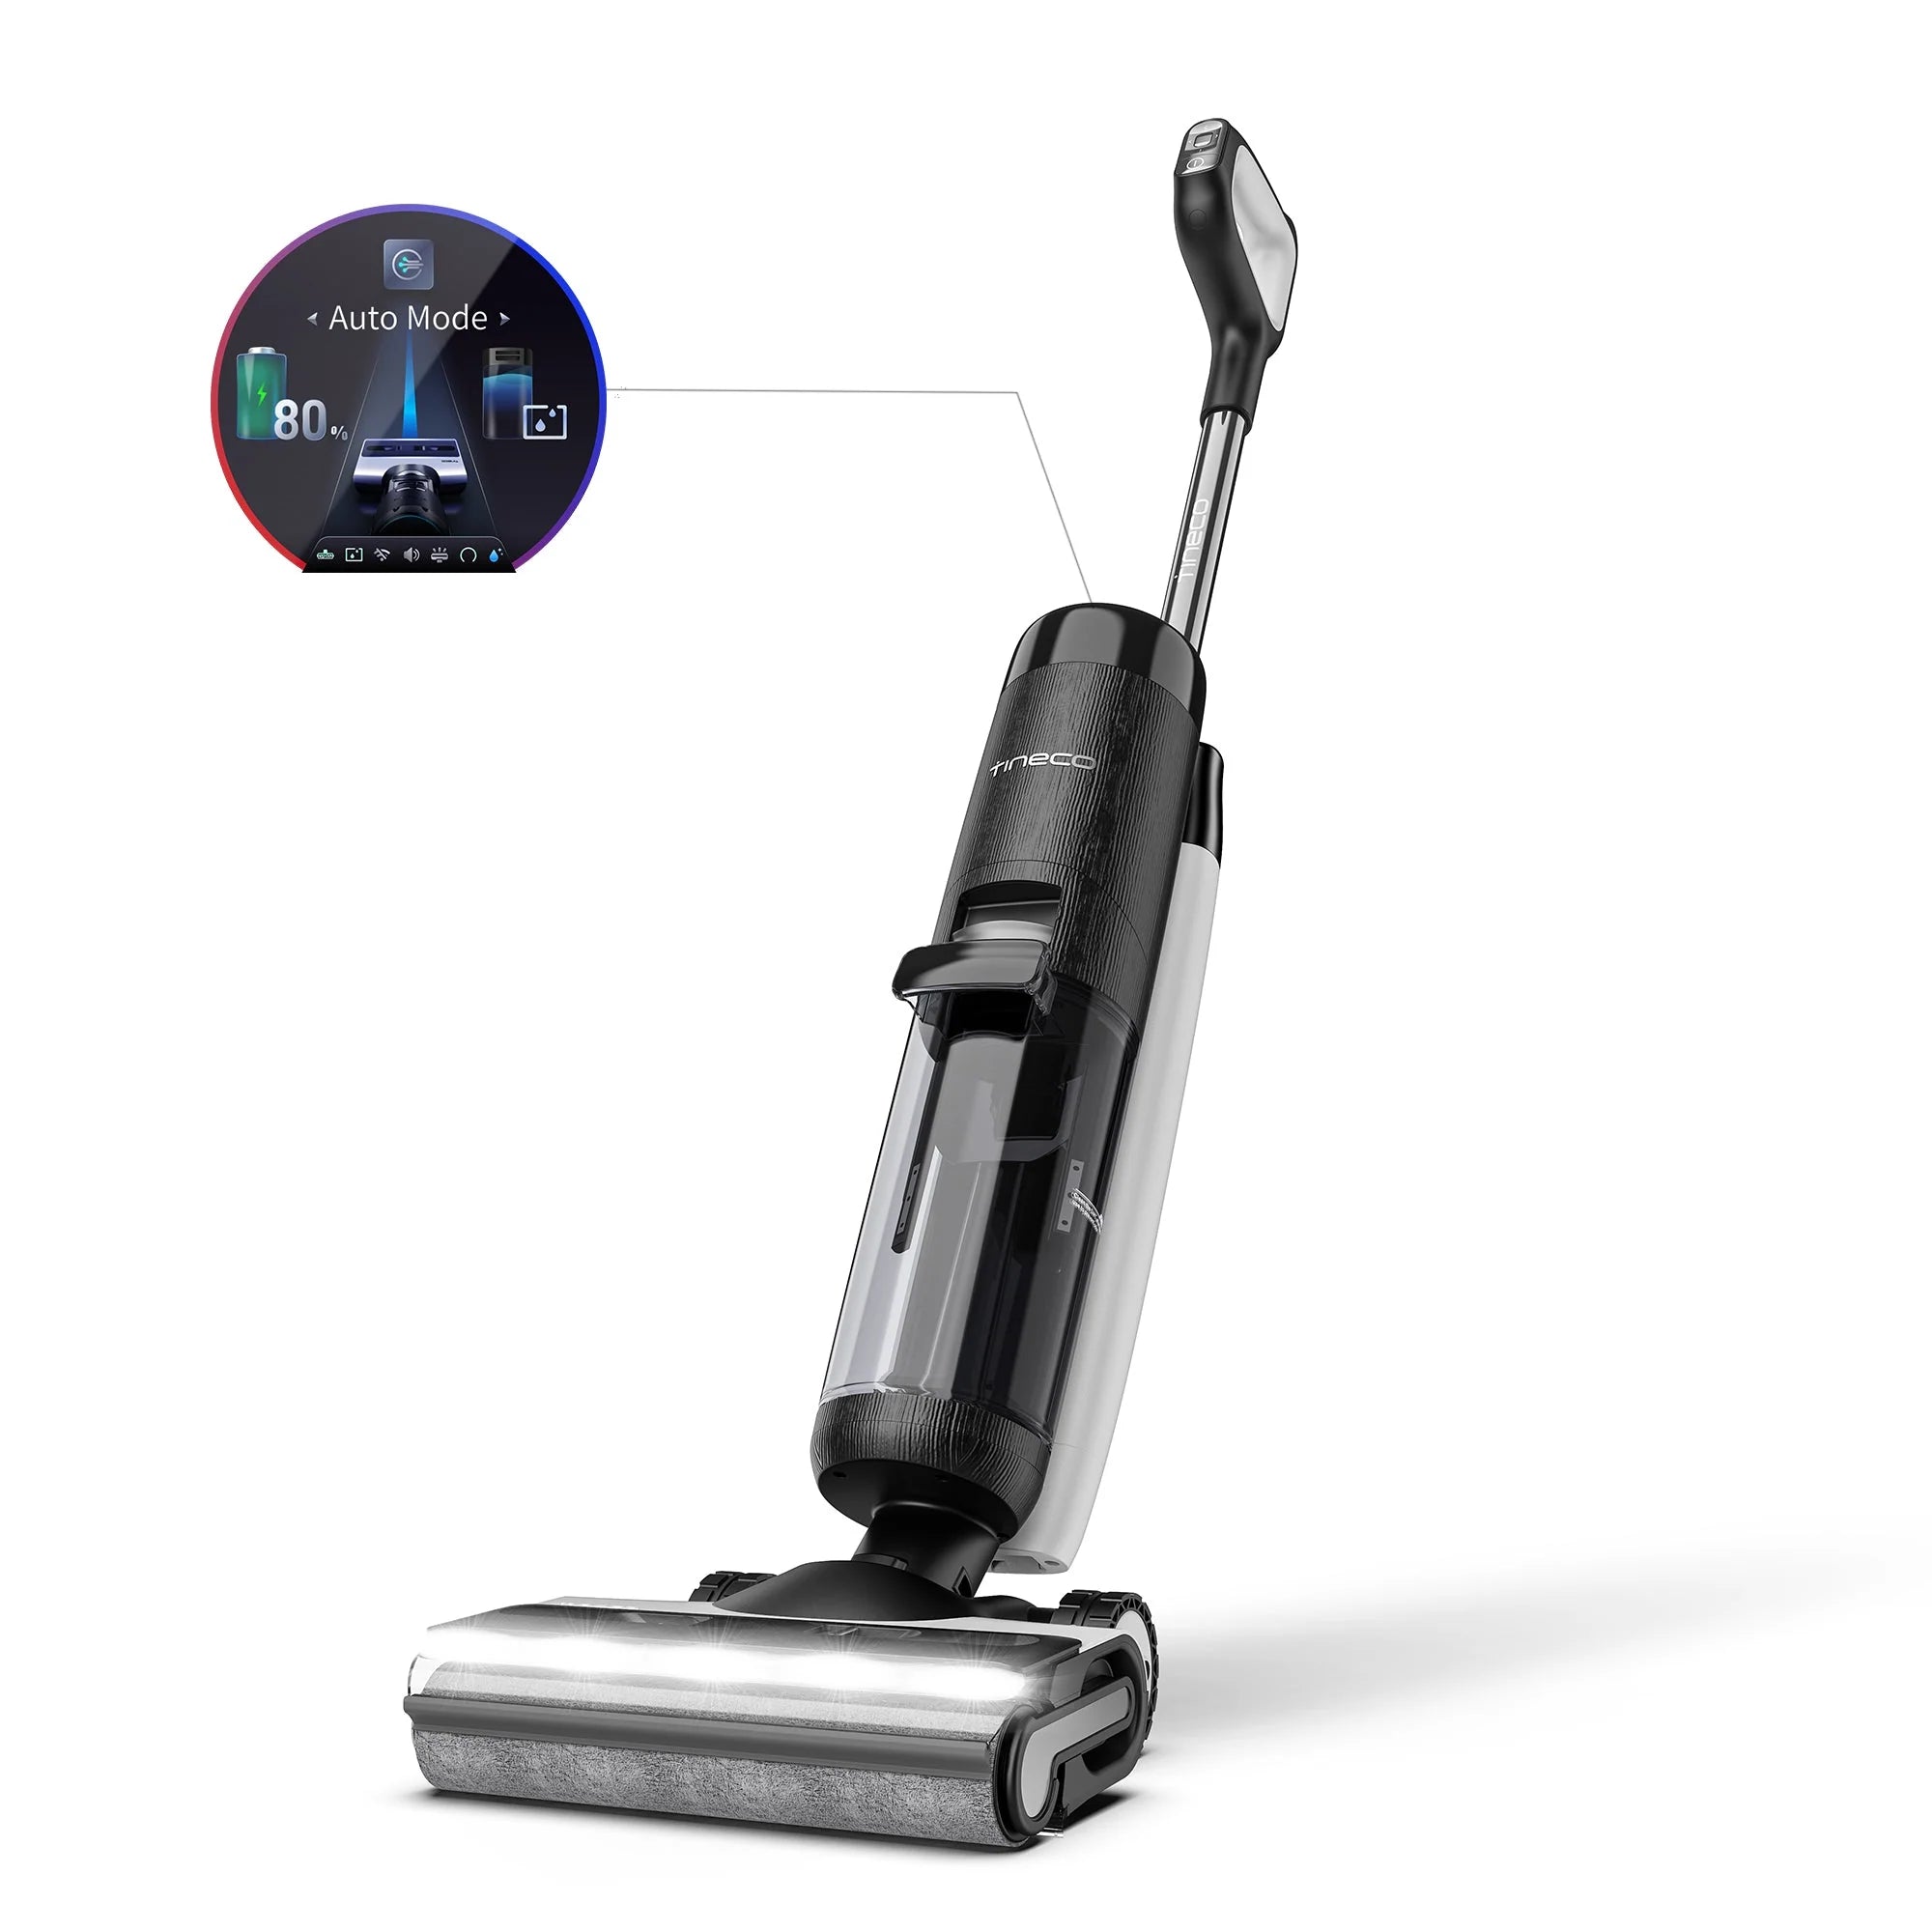 Tineco Floor ONE S3: Cordless, Lightweight Wet Dry Vacuum for